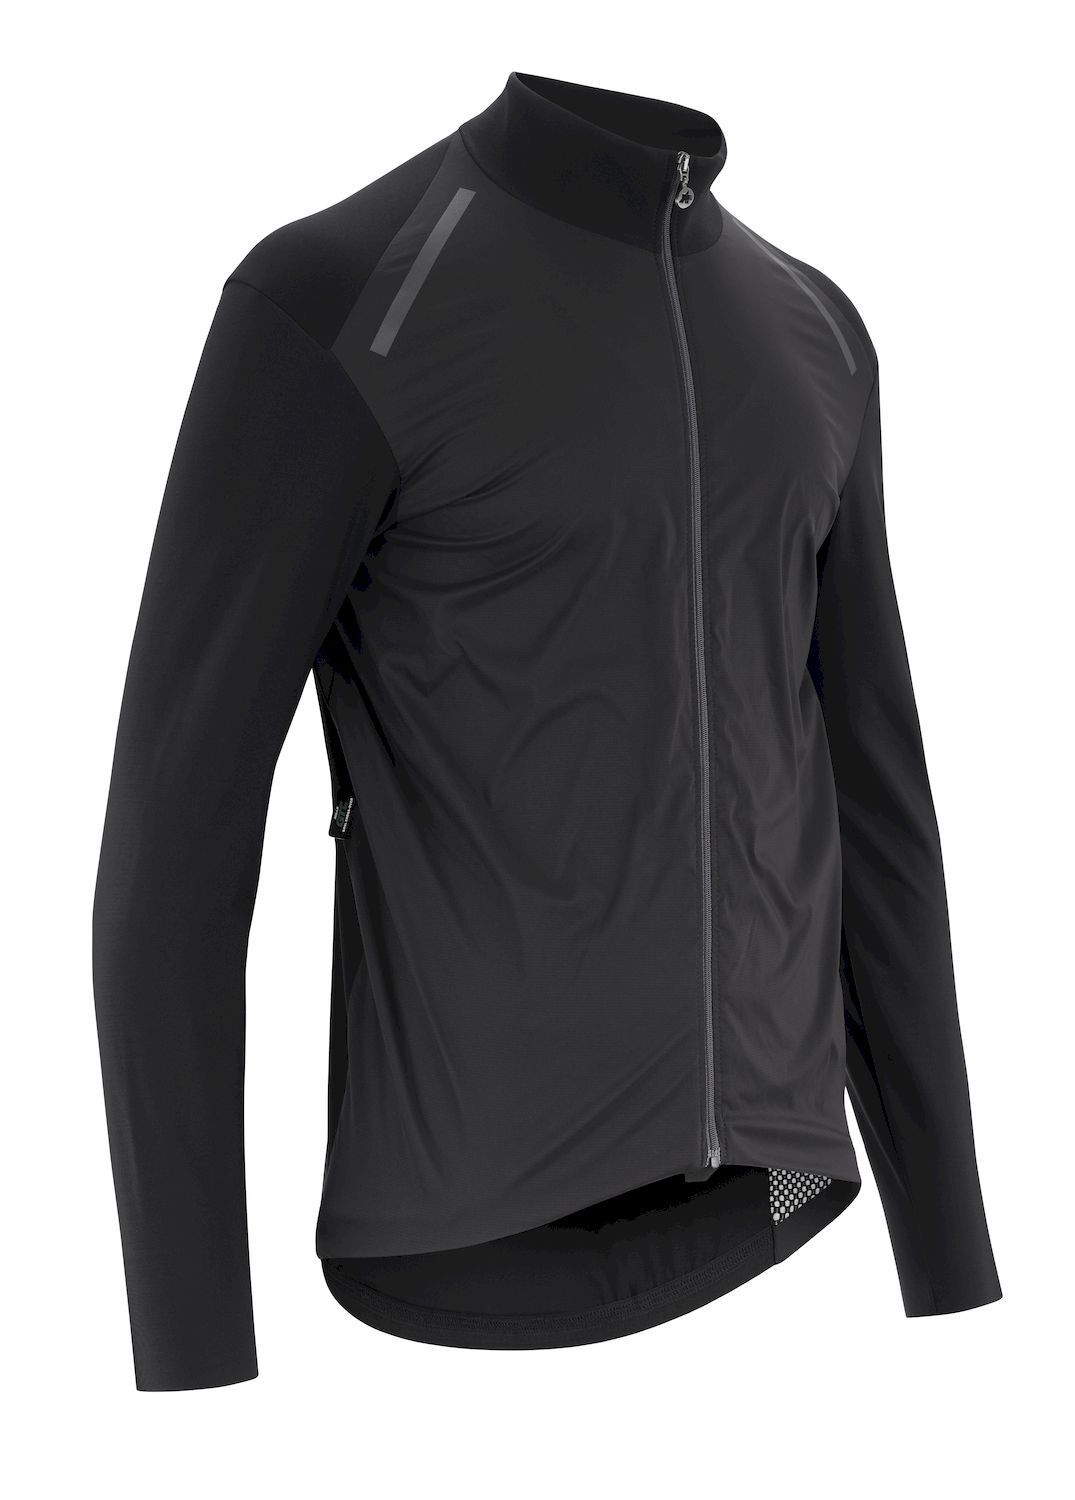 Assos MILLE GTC Loewenkralle Jacket C2 - Cycling jacket - Men's